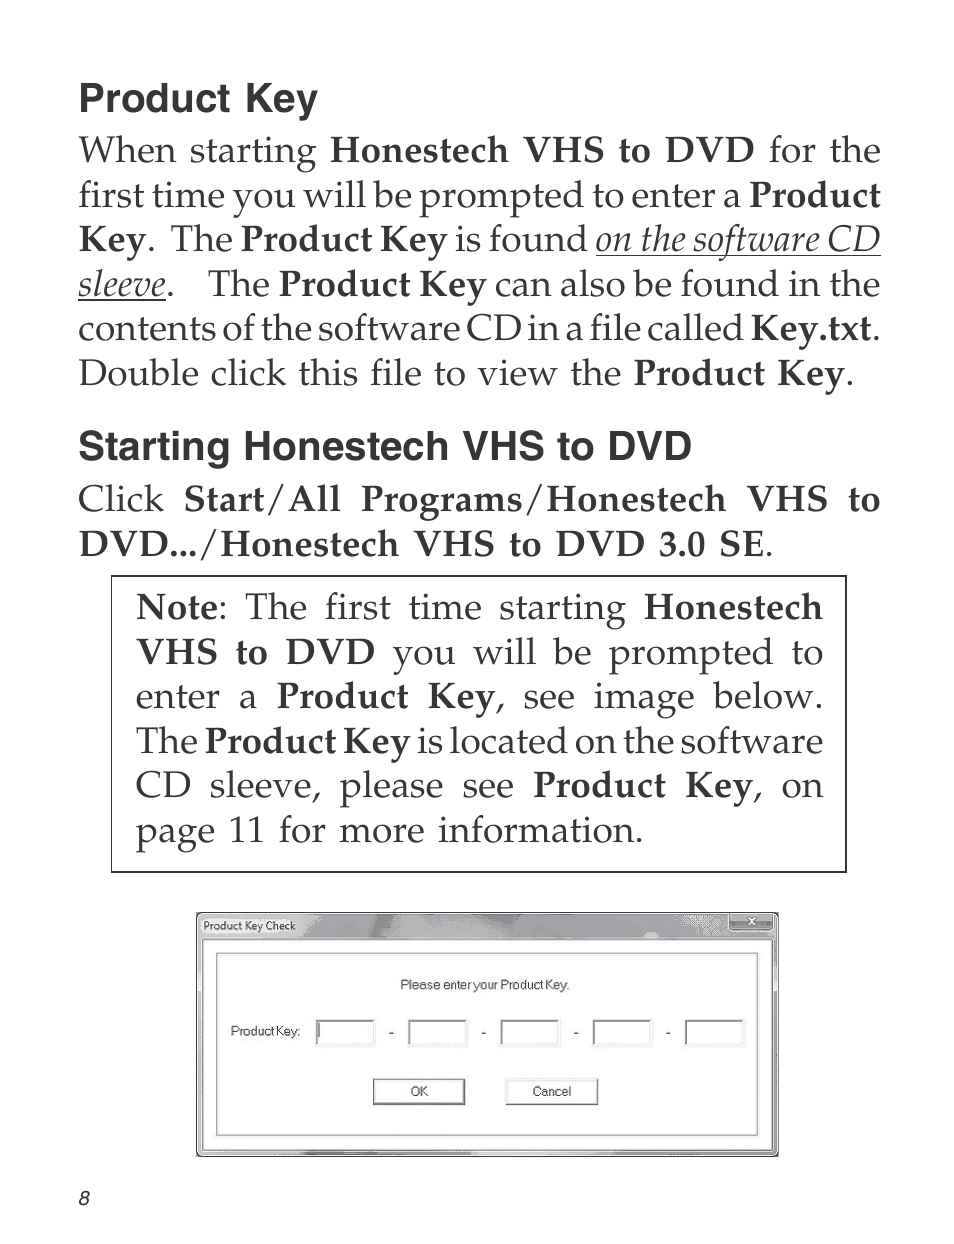 honestech vhs to dvd 3.0 se product key